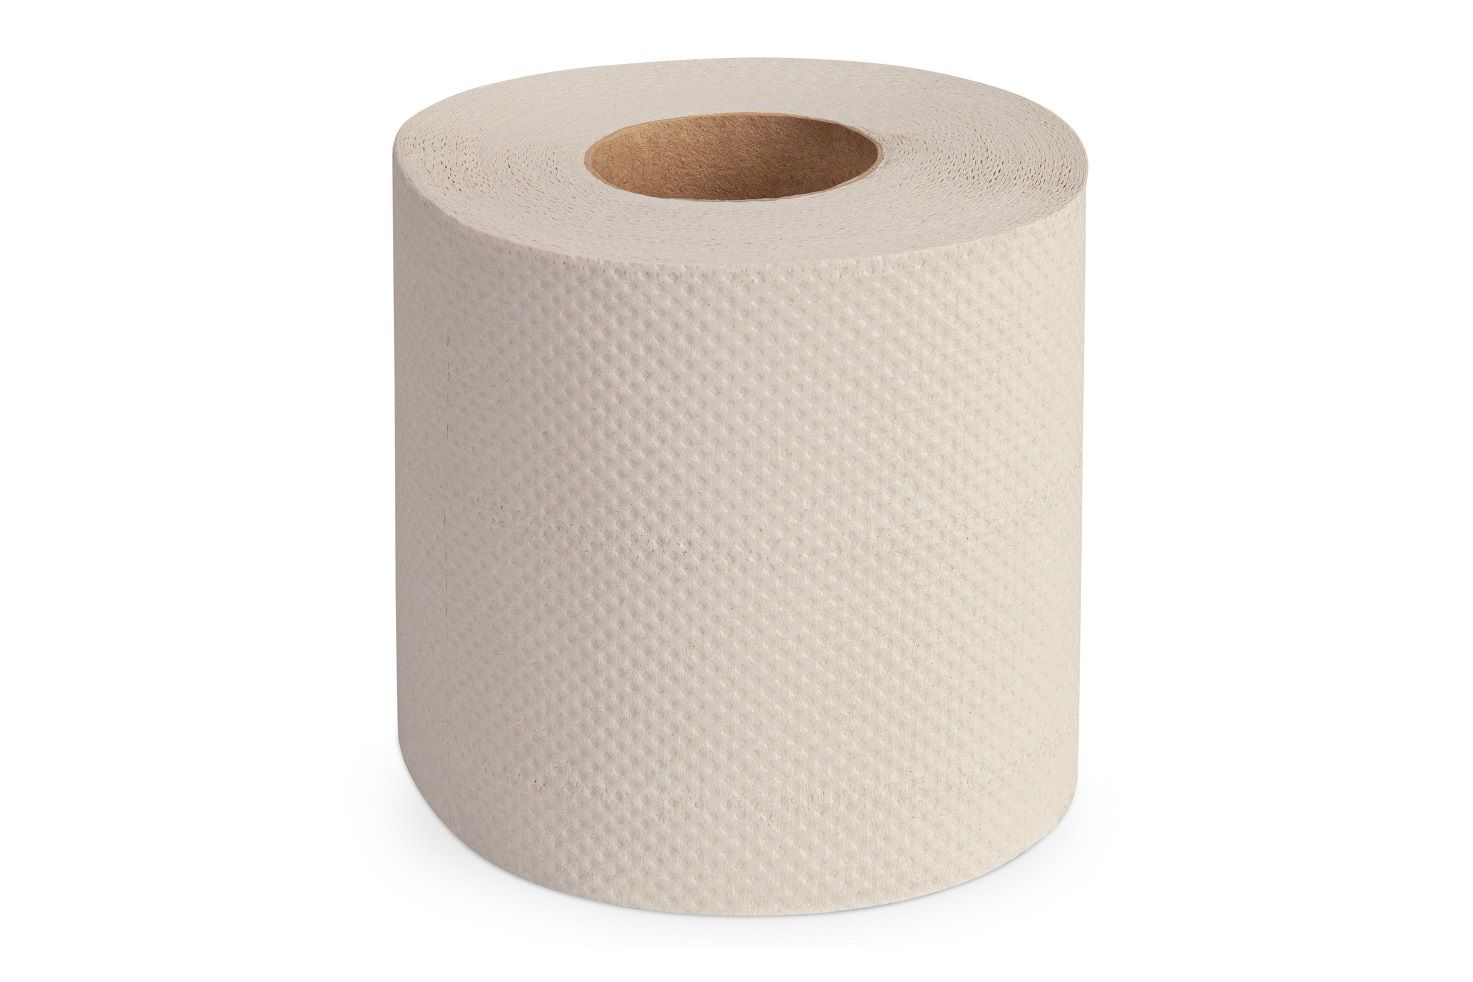 Toilettenpapier Kleinrolle (2-lagig, Recycling, Weiß)